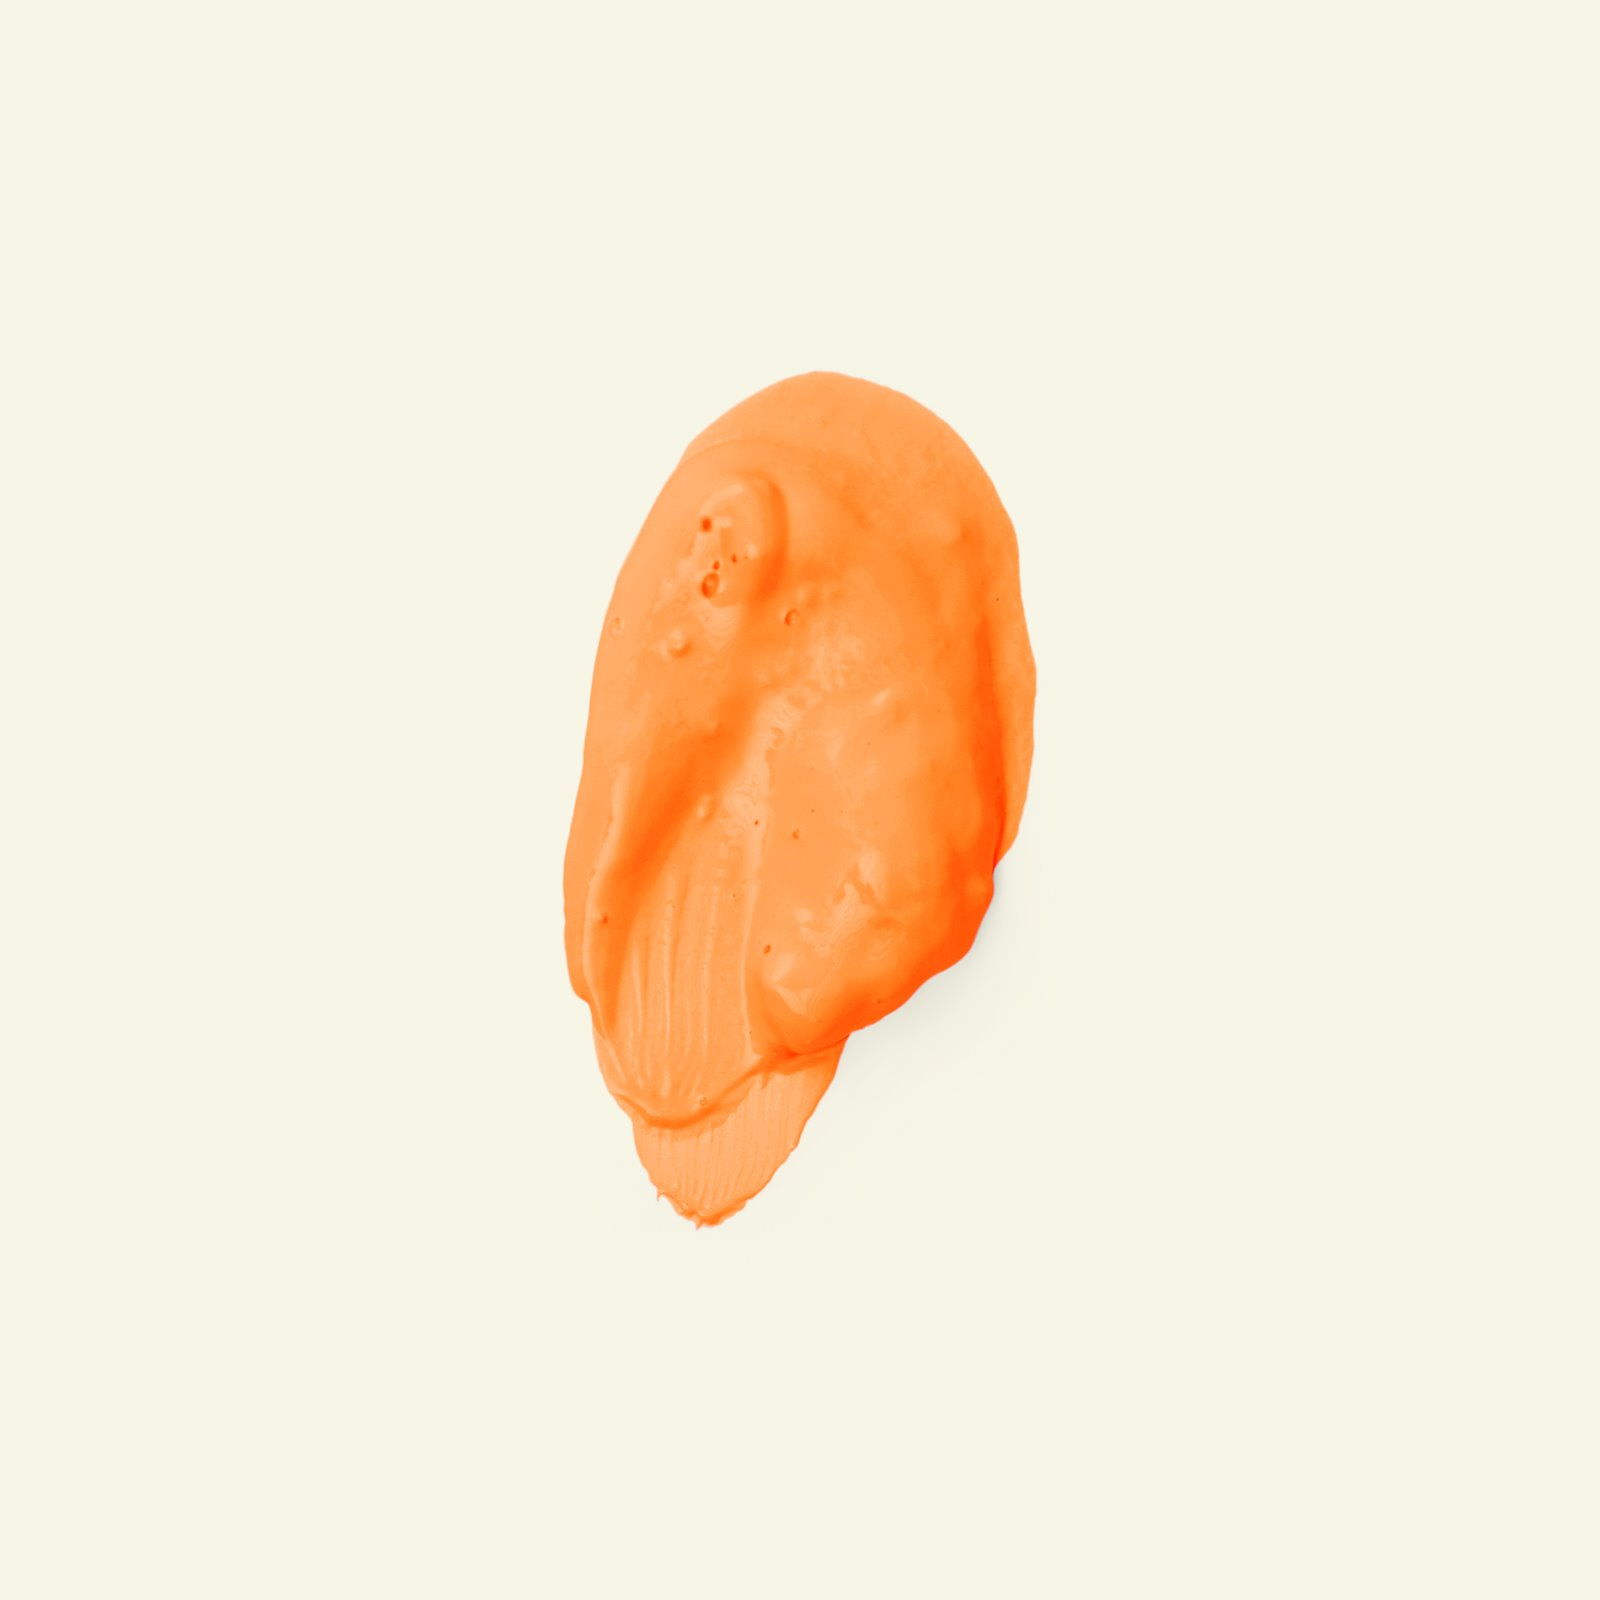 MUCKI textil fingerfärg, orange, 150ml 29688_pack